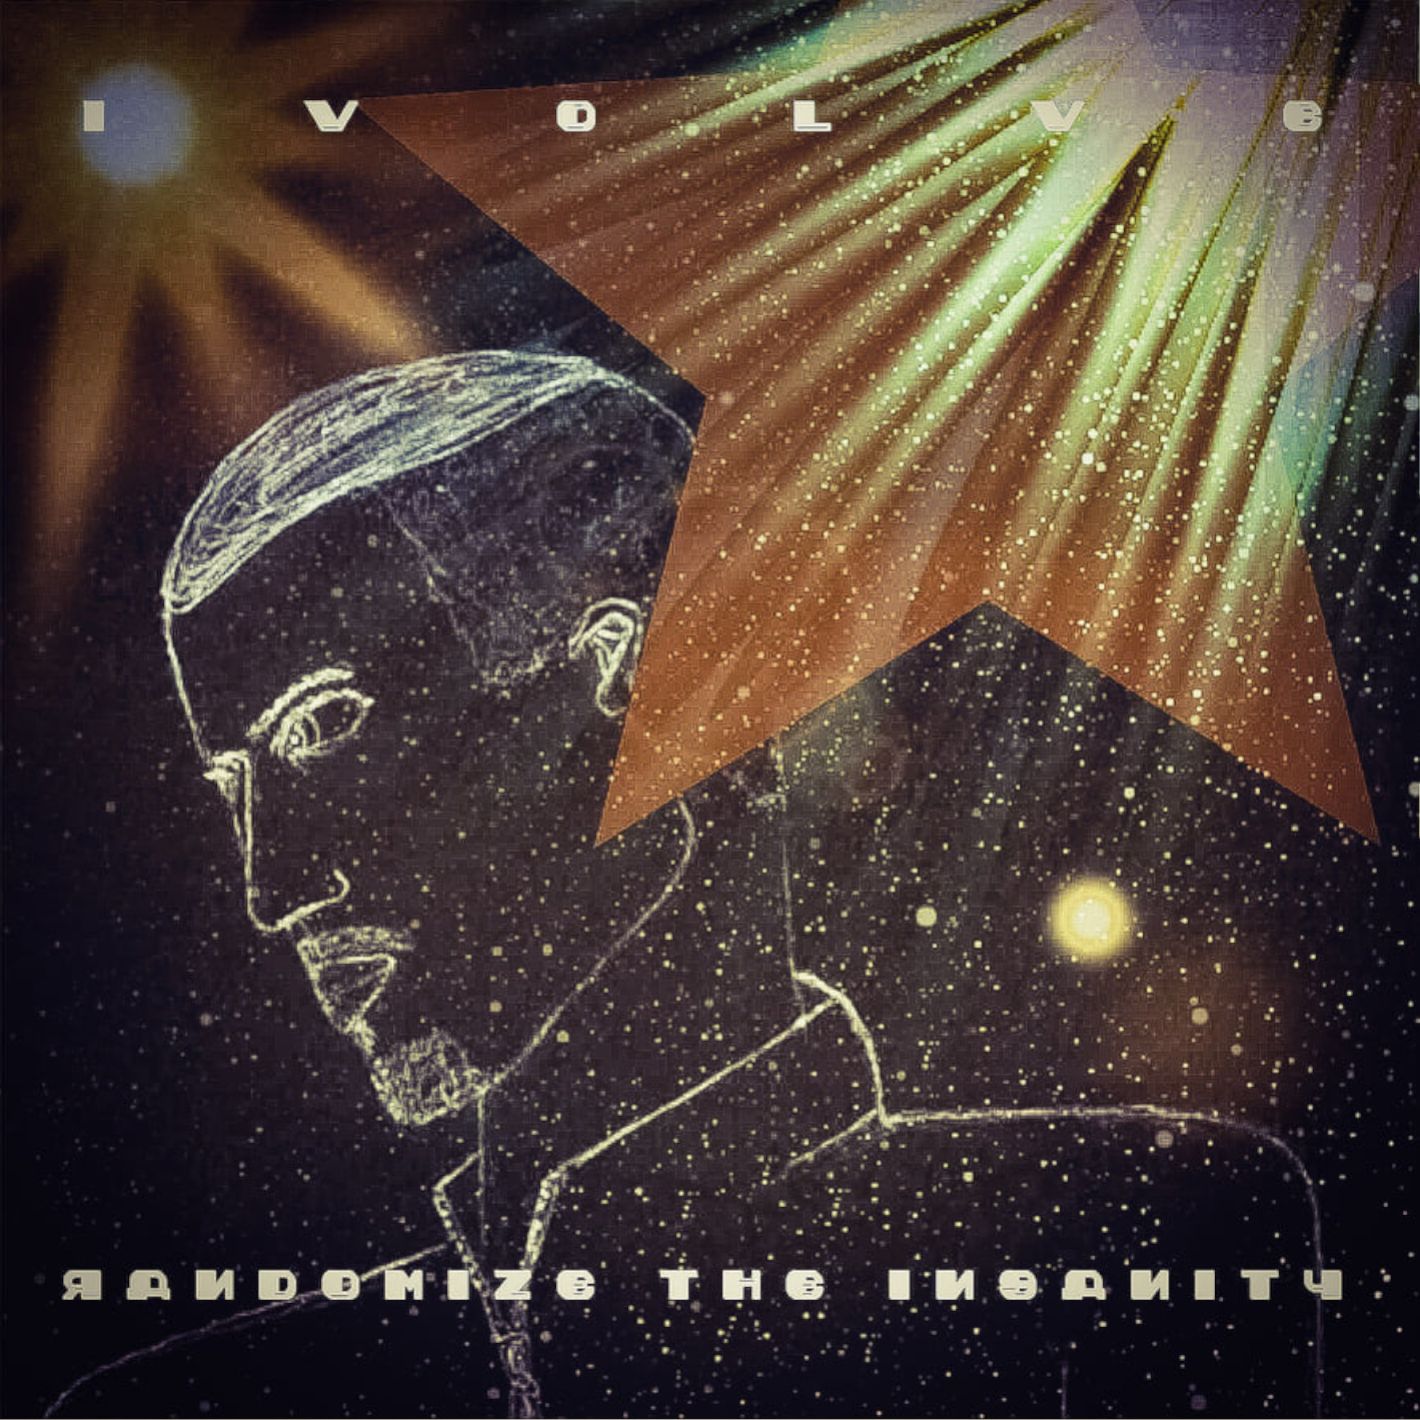 Ivolve - Randomize the Insanity front cover